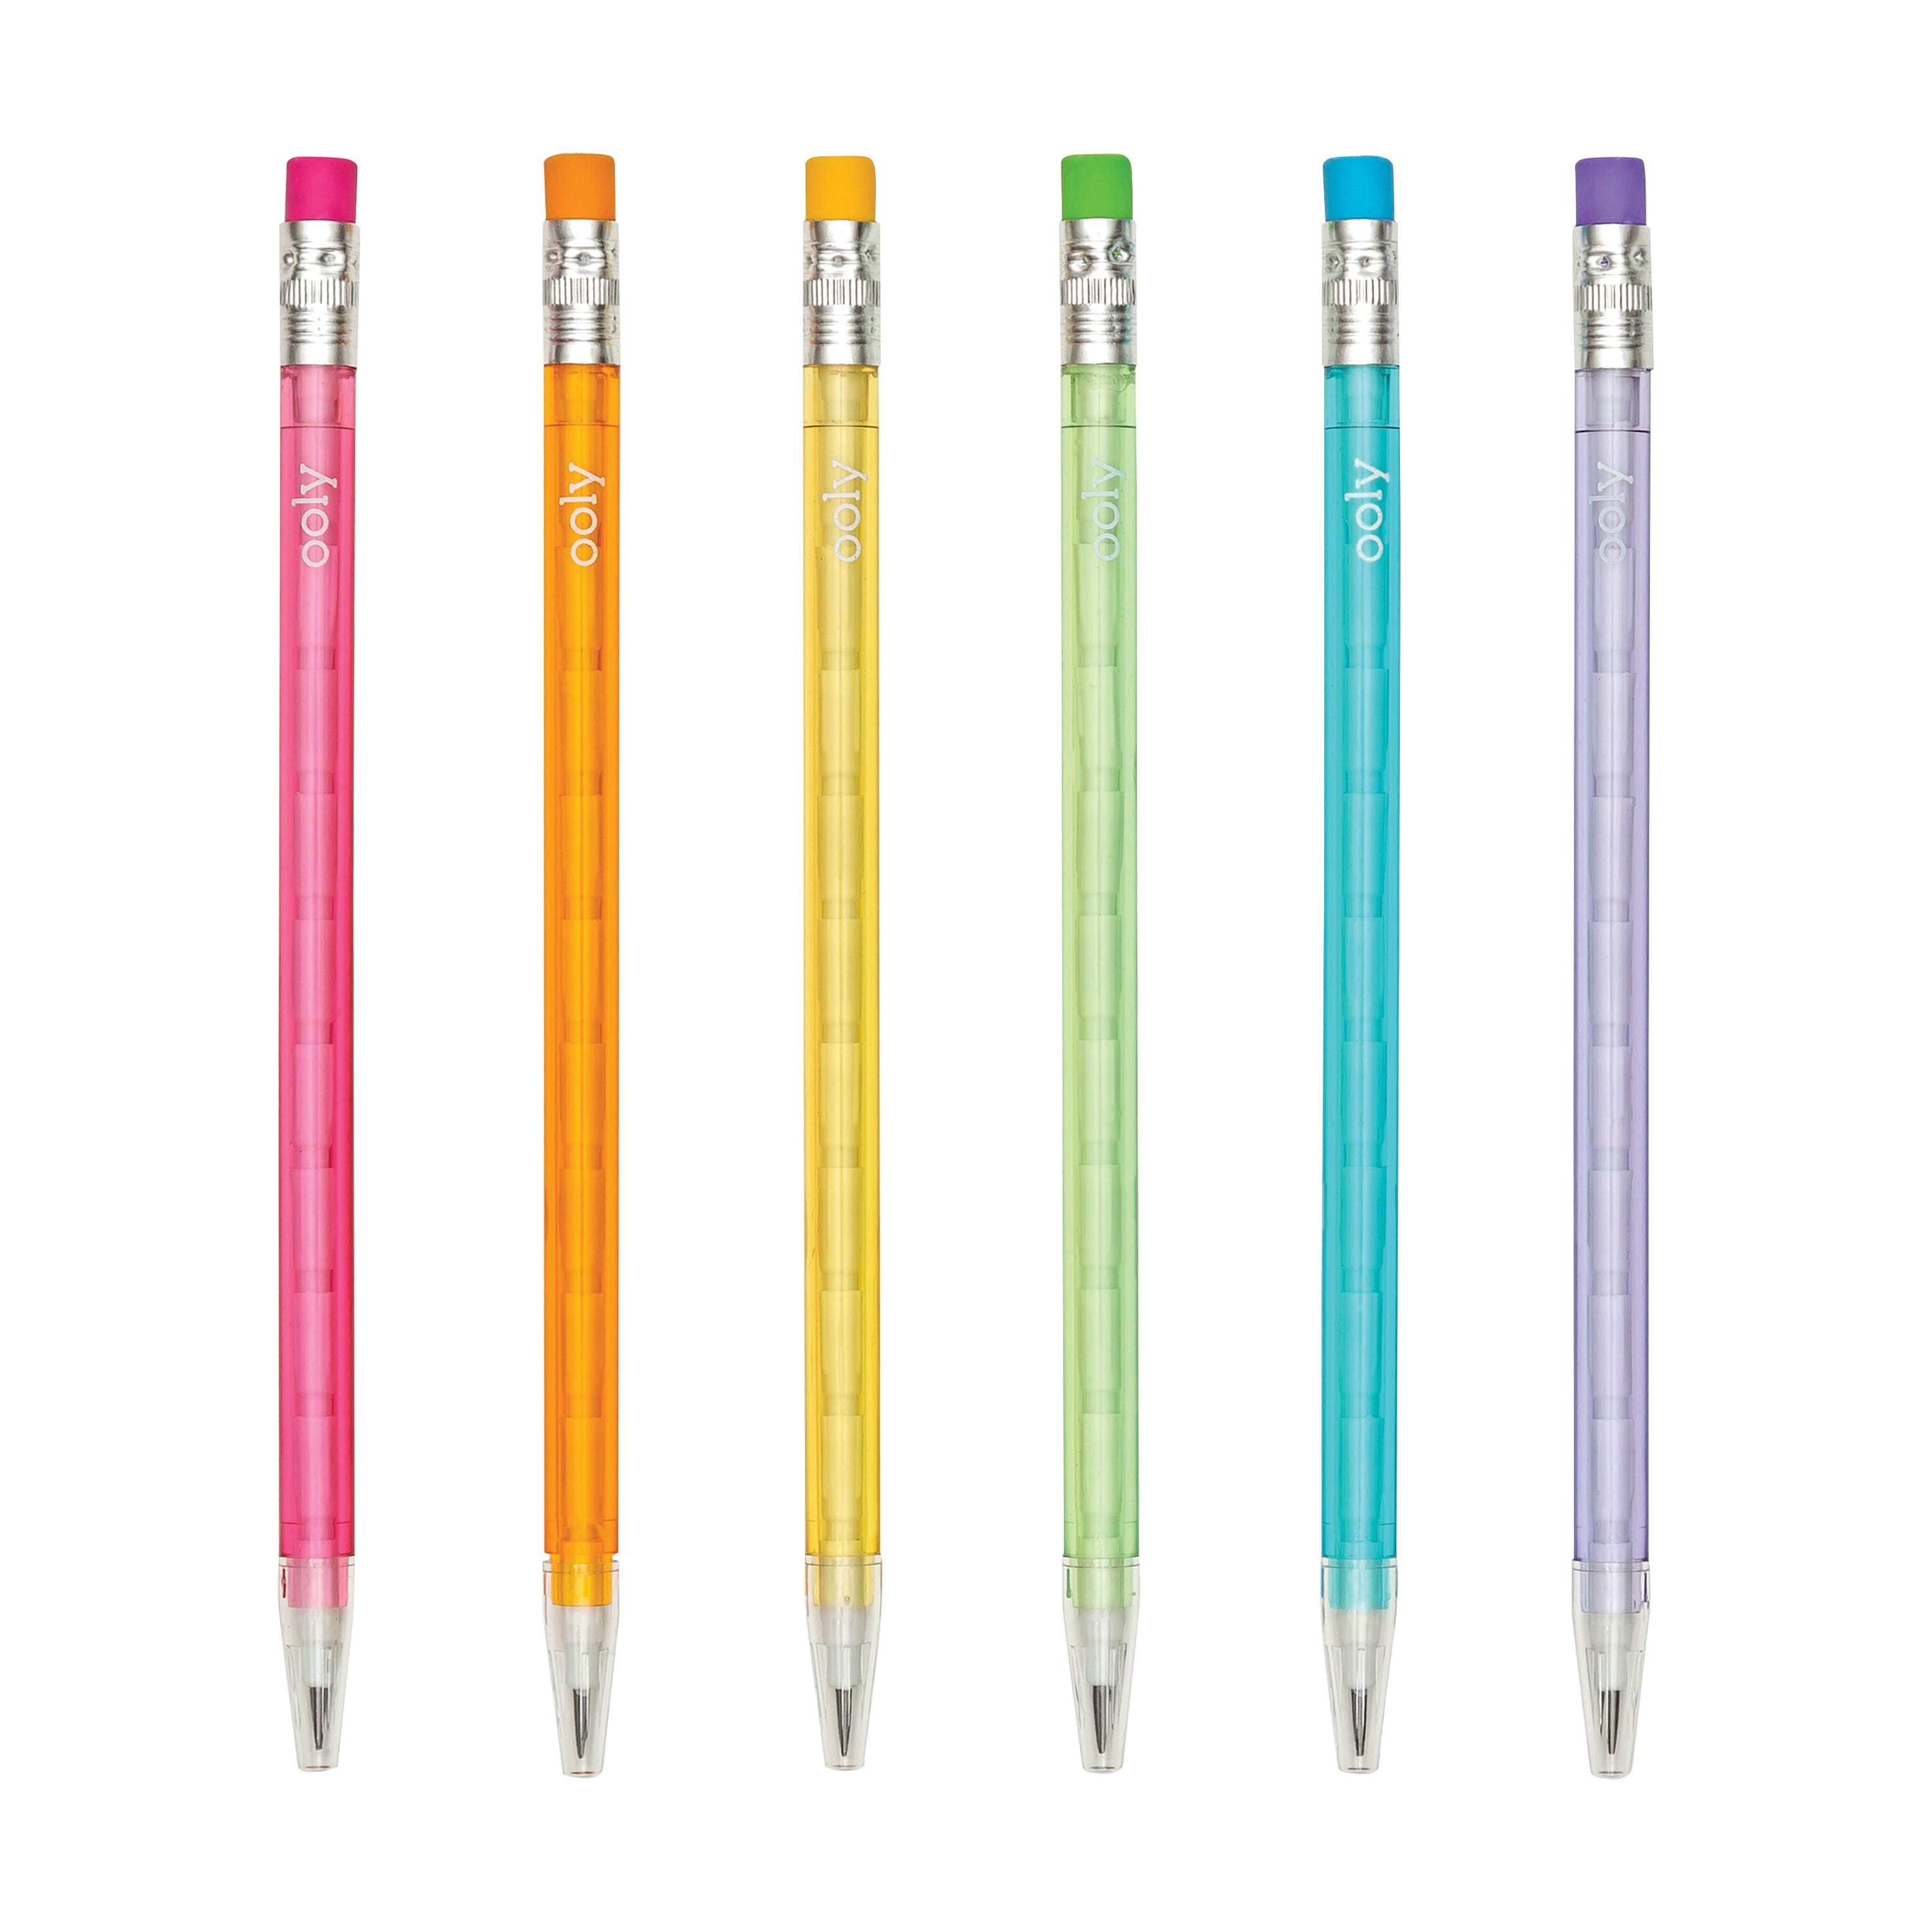 OOLY Stay Sharp Rainbow Pencils Set